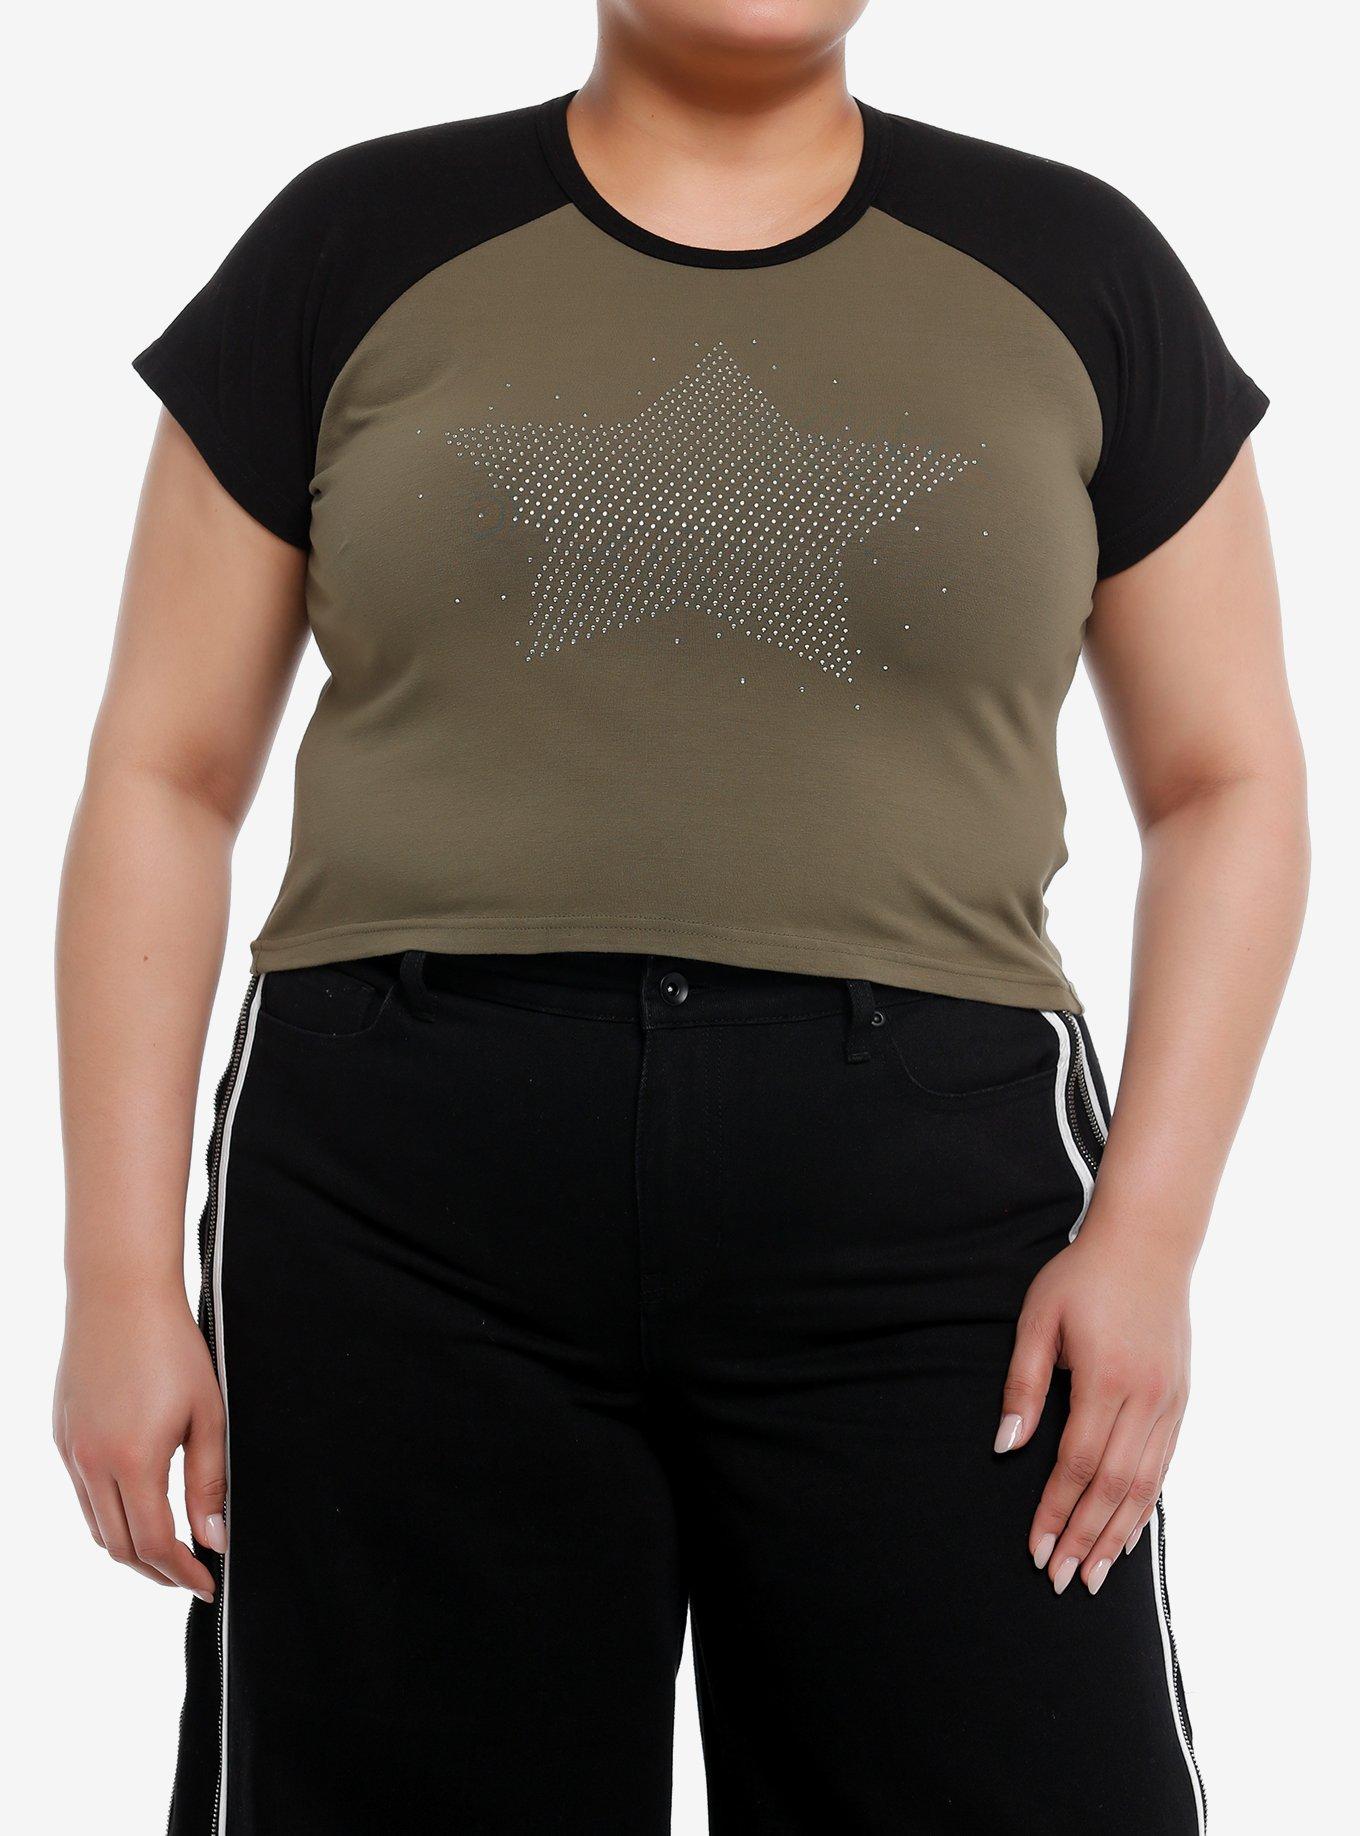 Star Rhinestone Dark Raglan Girls Crop T-Shirt Plus